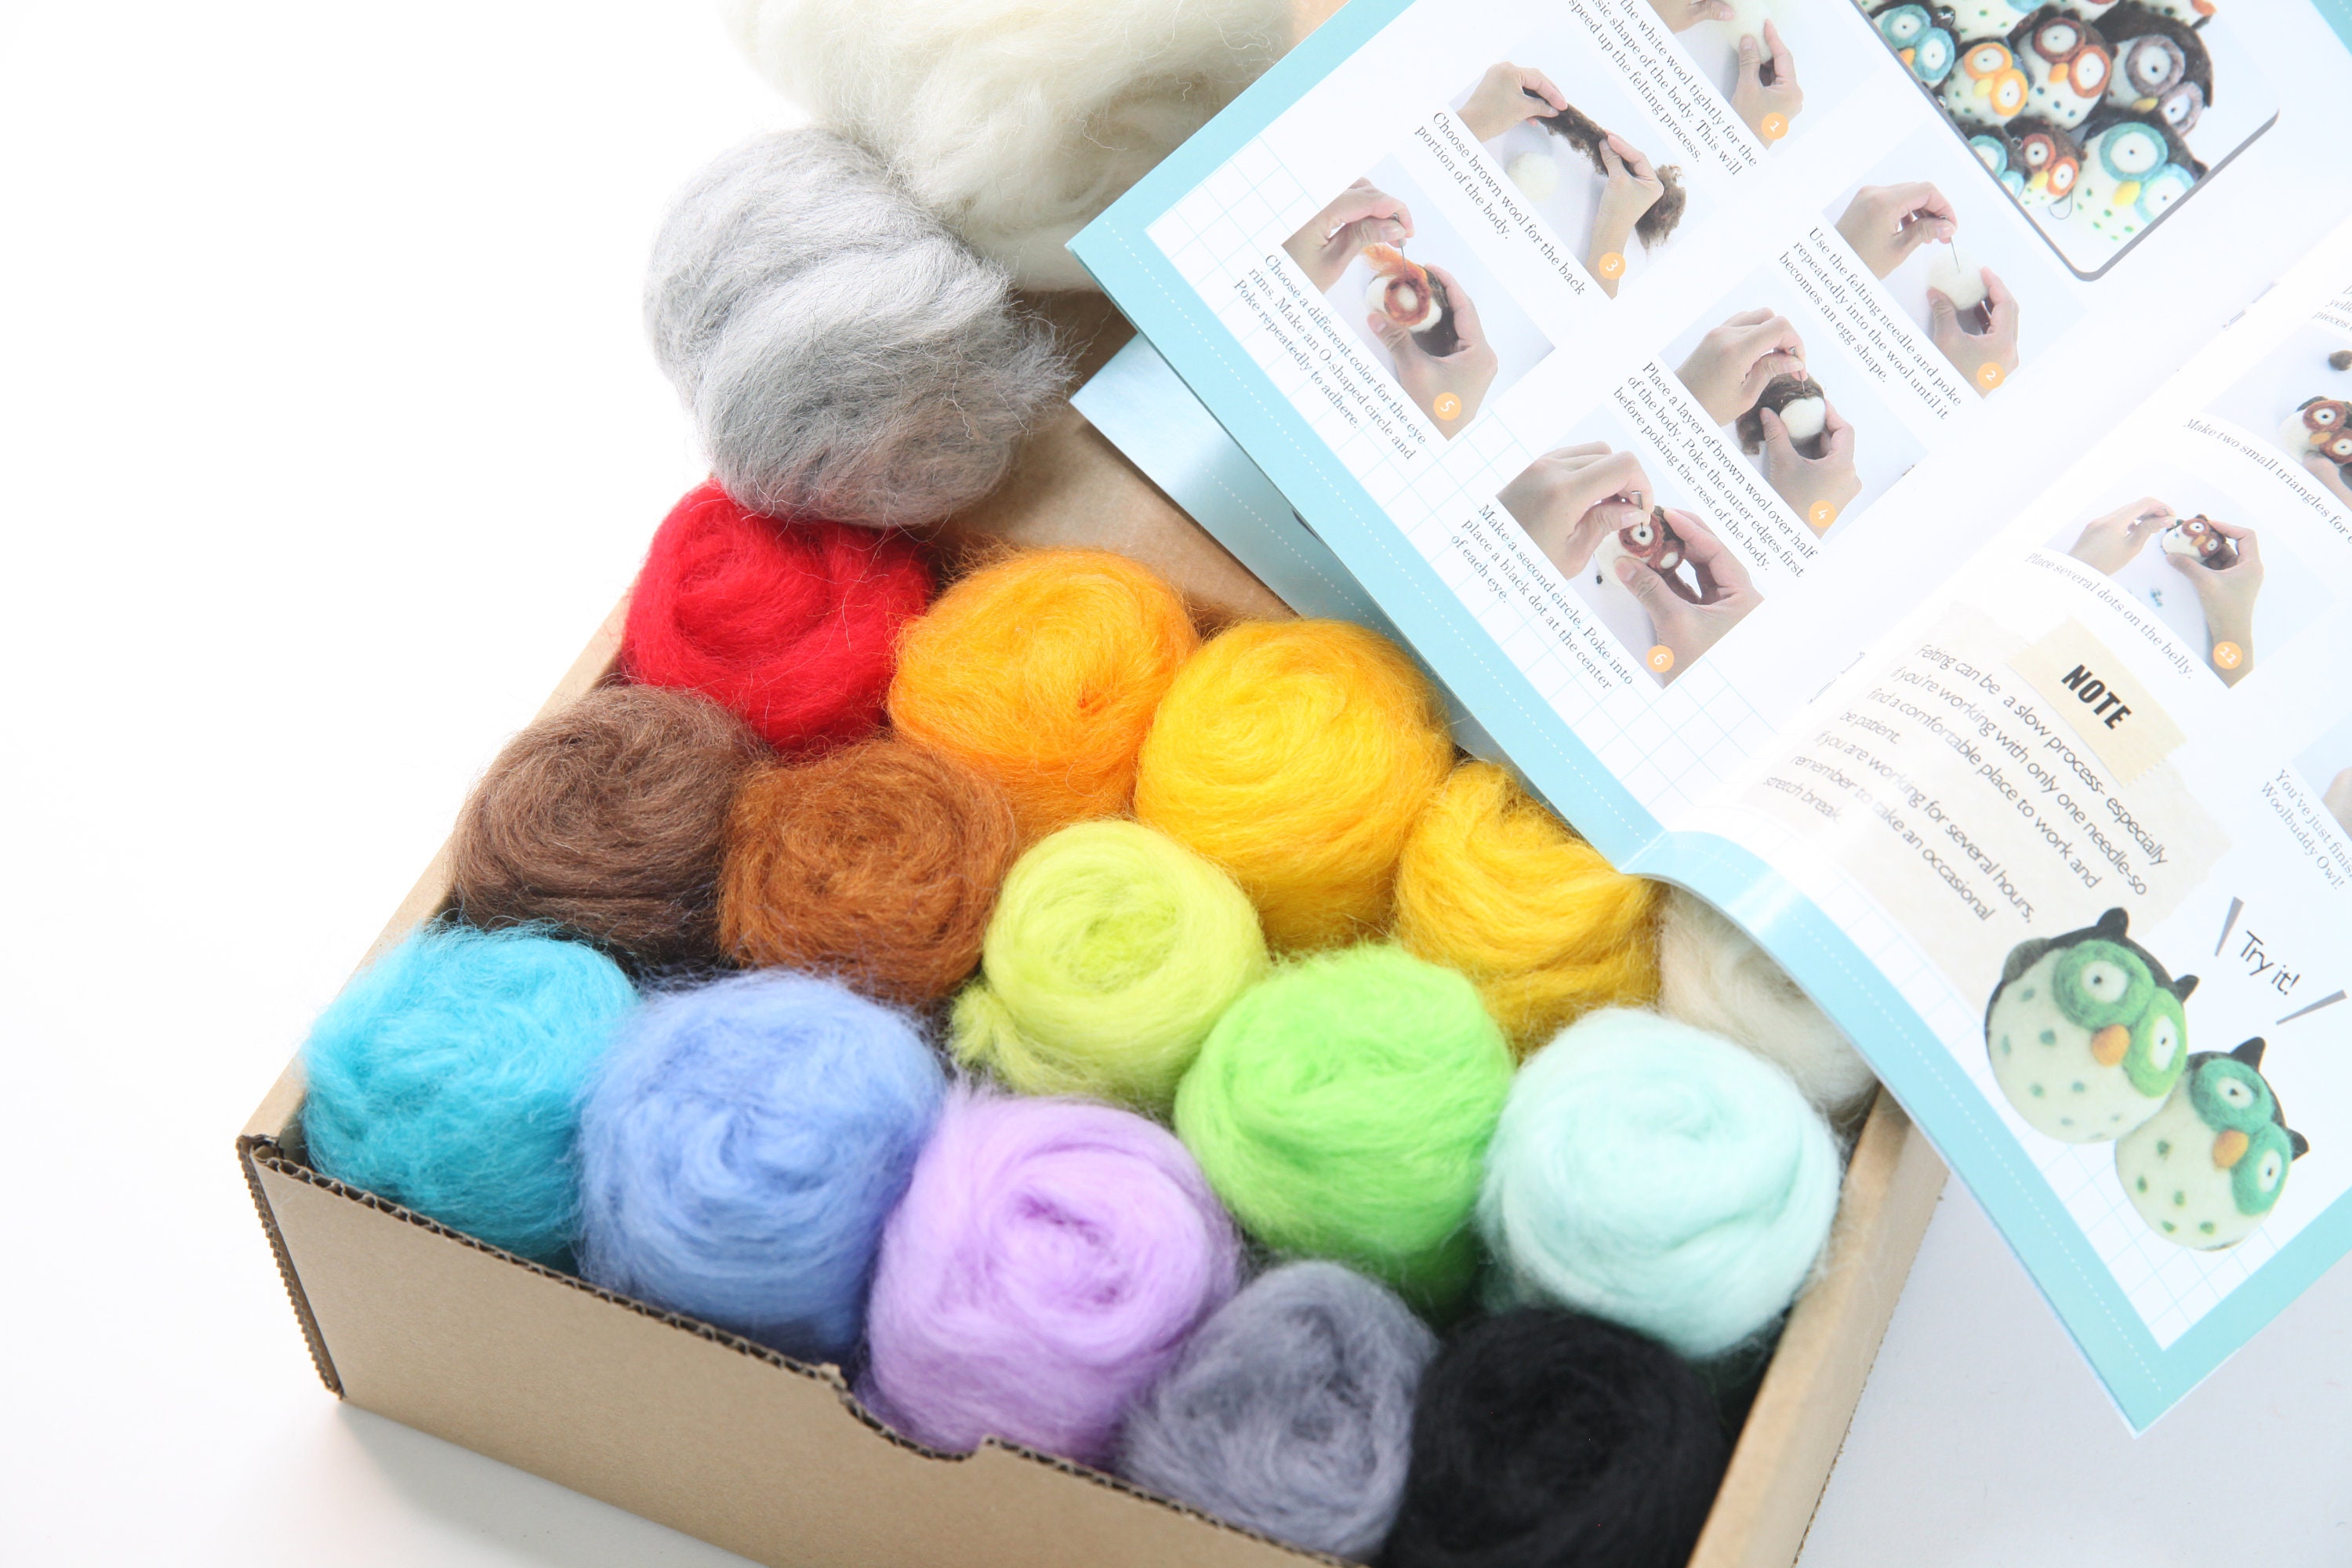 Woolbuddy Needle Felting Starter Kit by 16 Wool Colors, Felting Foam Mat, 6 Needles, 3 Thimbles & Instruction Manuel - Great for Arts & Crafts